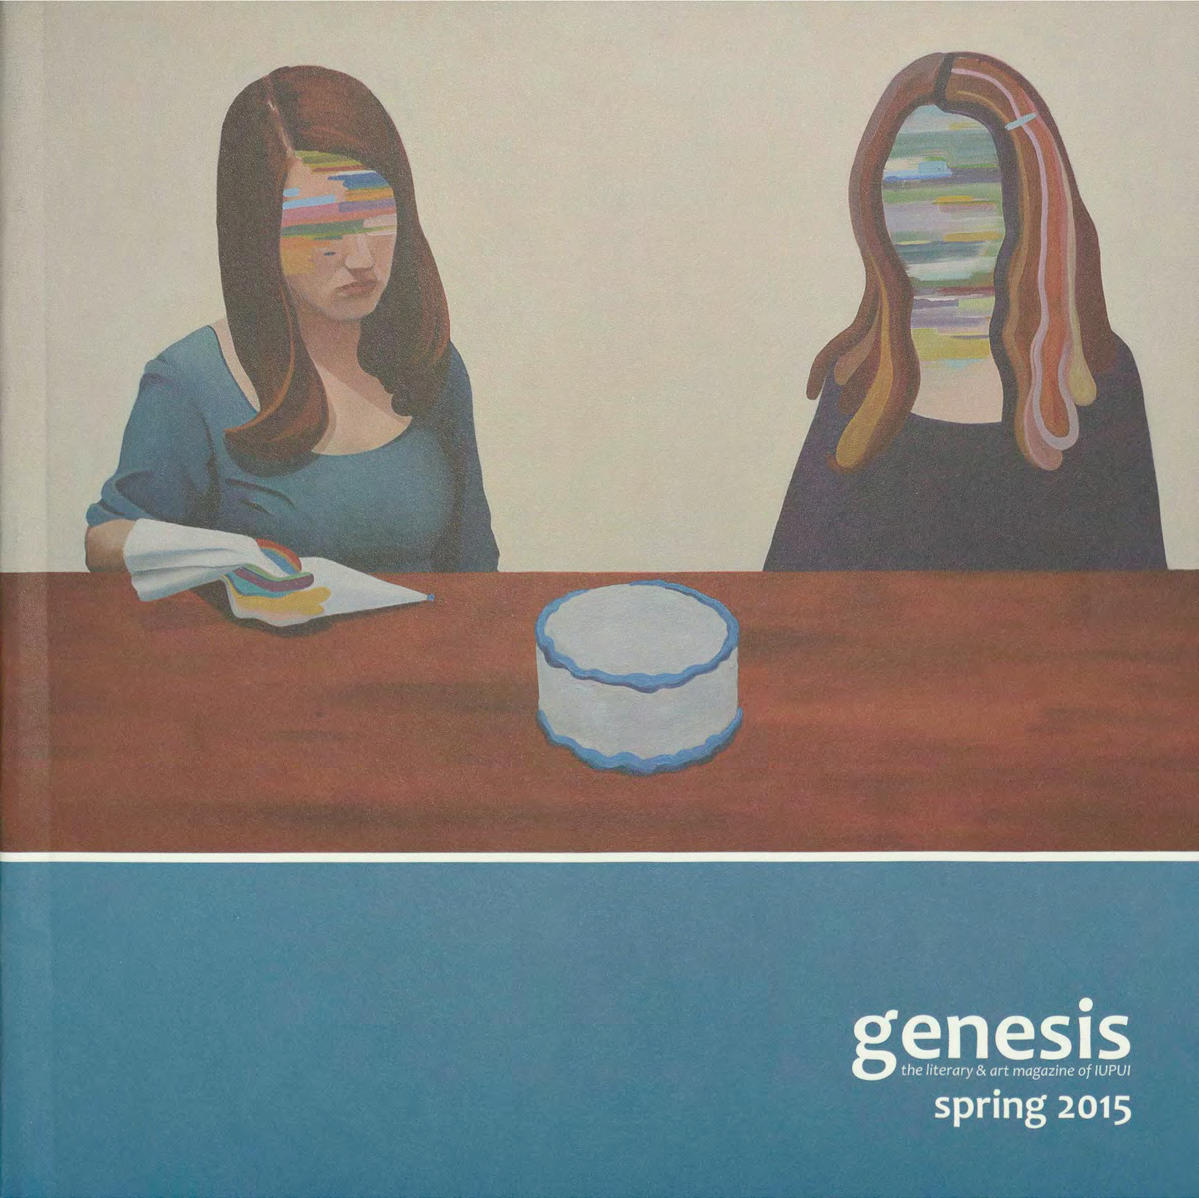 genesis spring 2015 cover